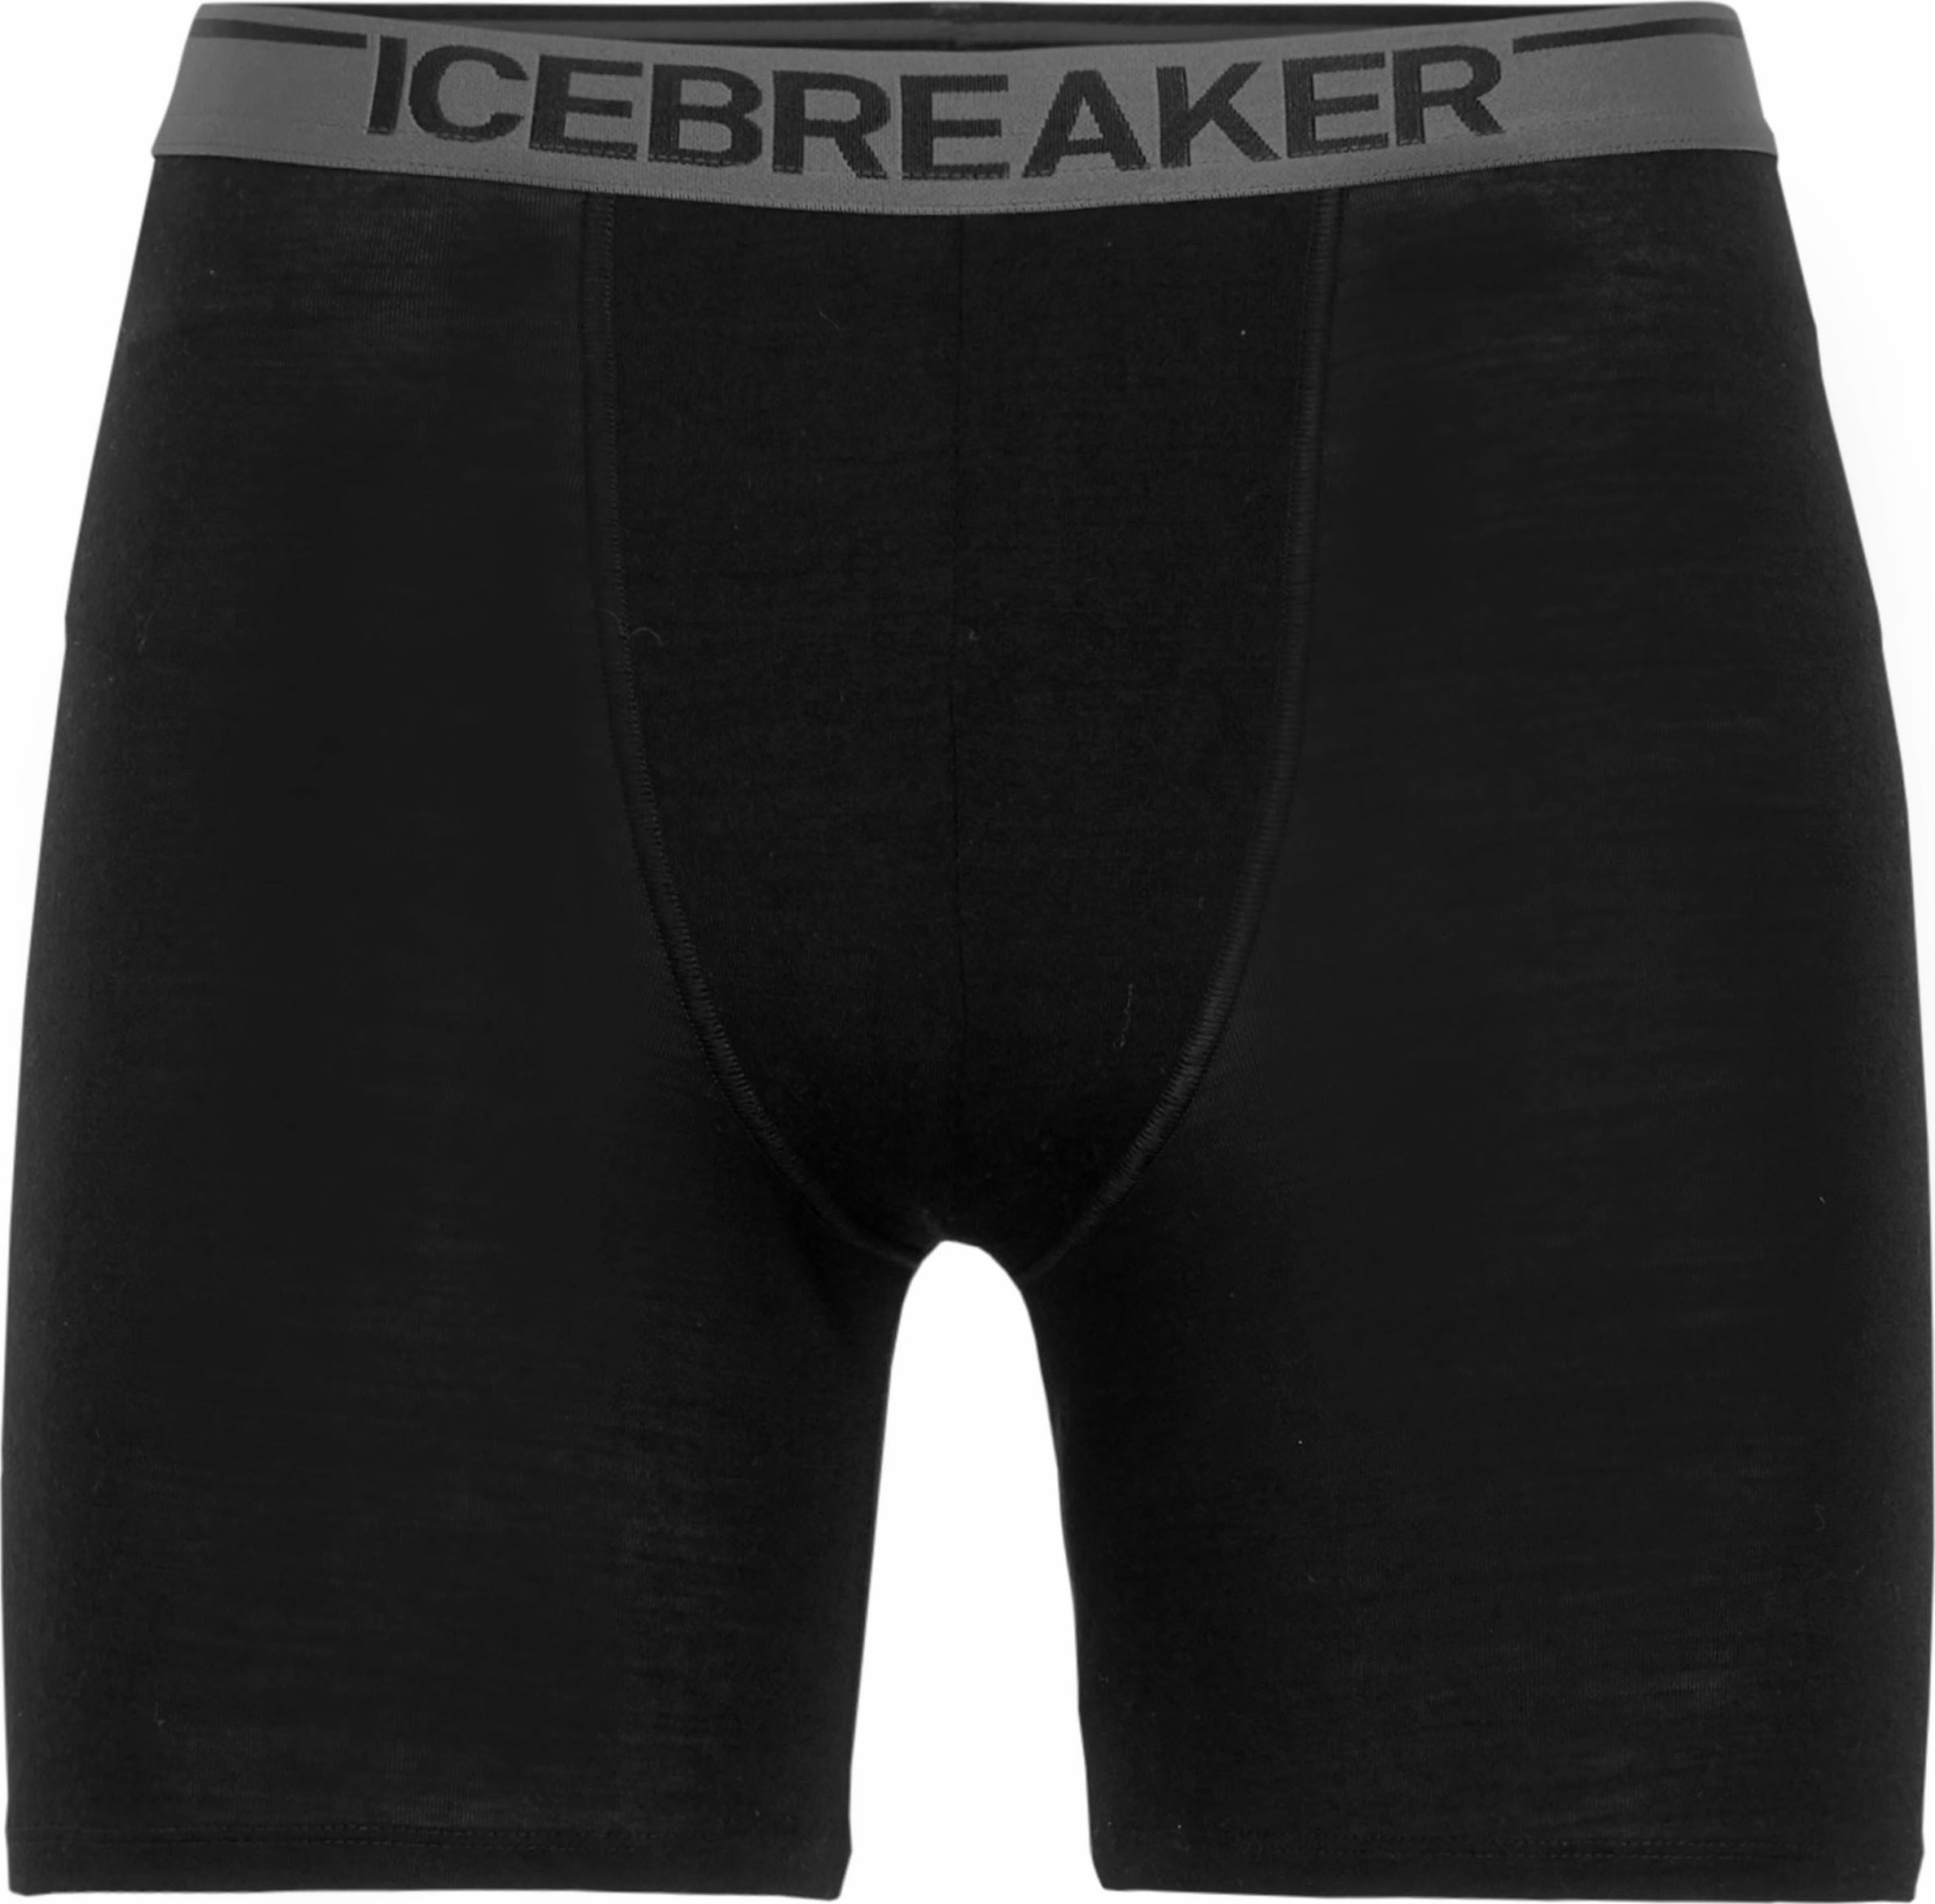 Køb Icebreaker Long Boxers fra